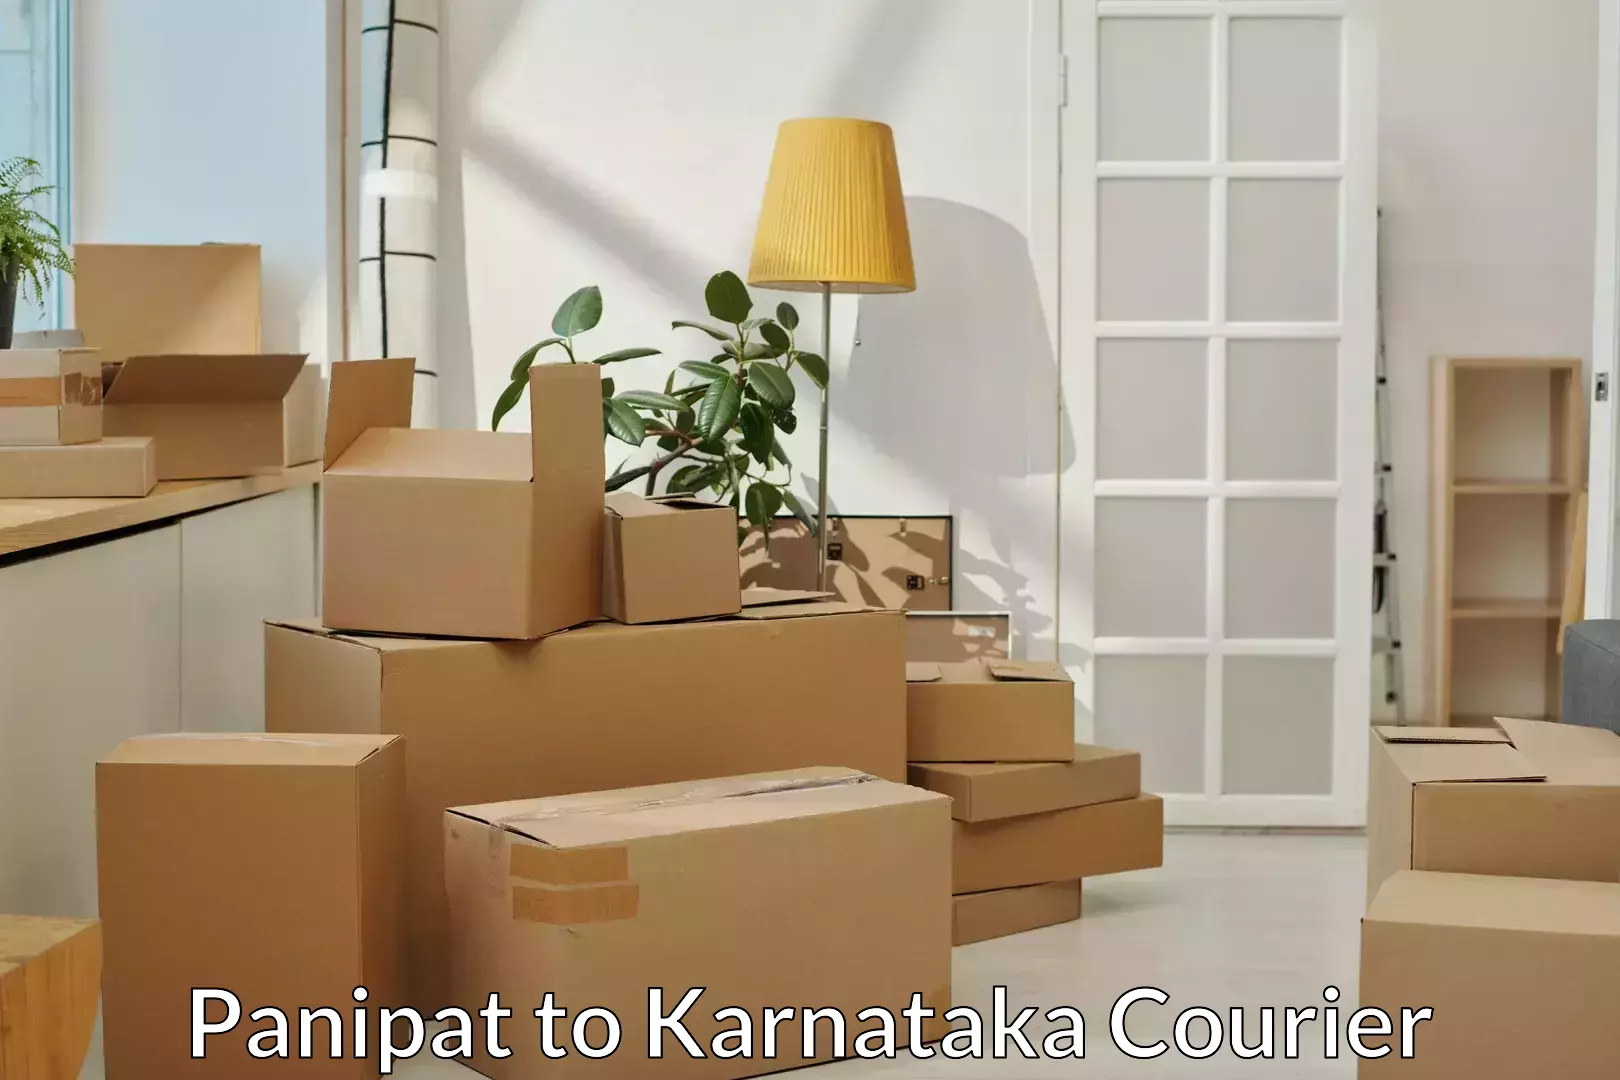 Trusted moving company Panipat to Karnataka